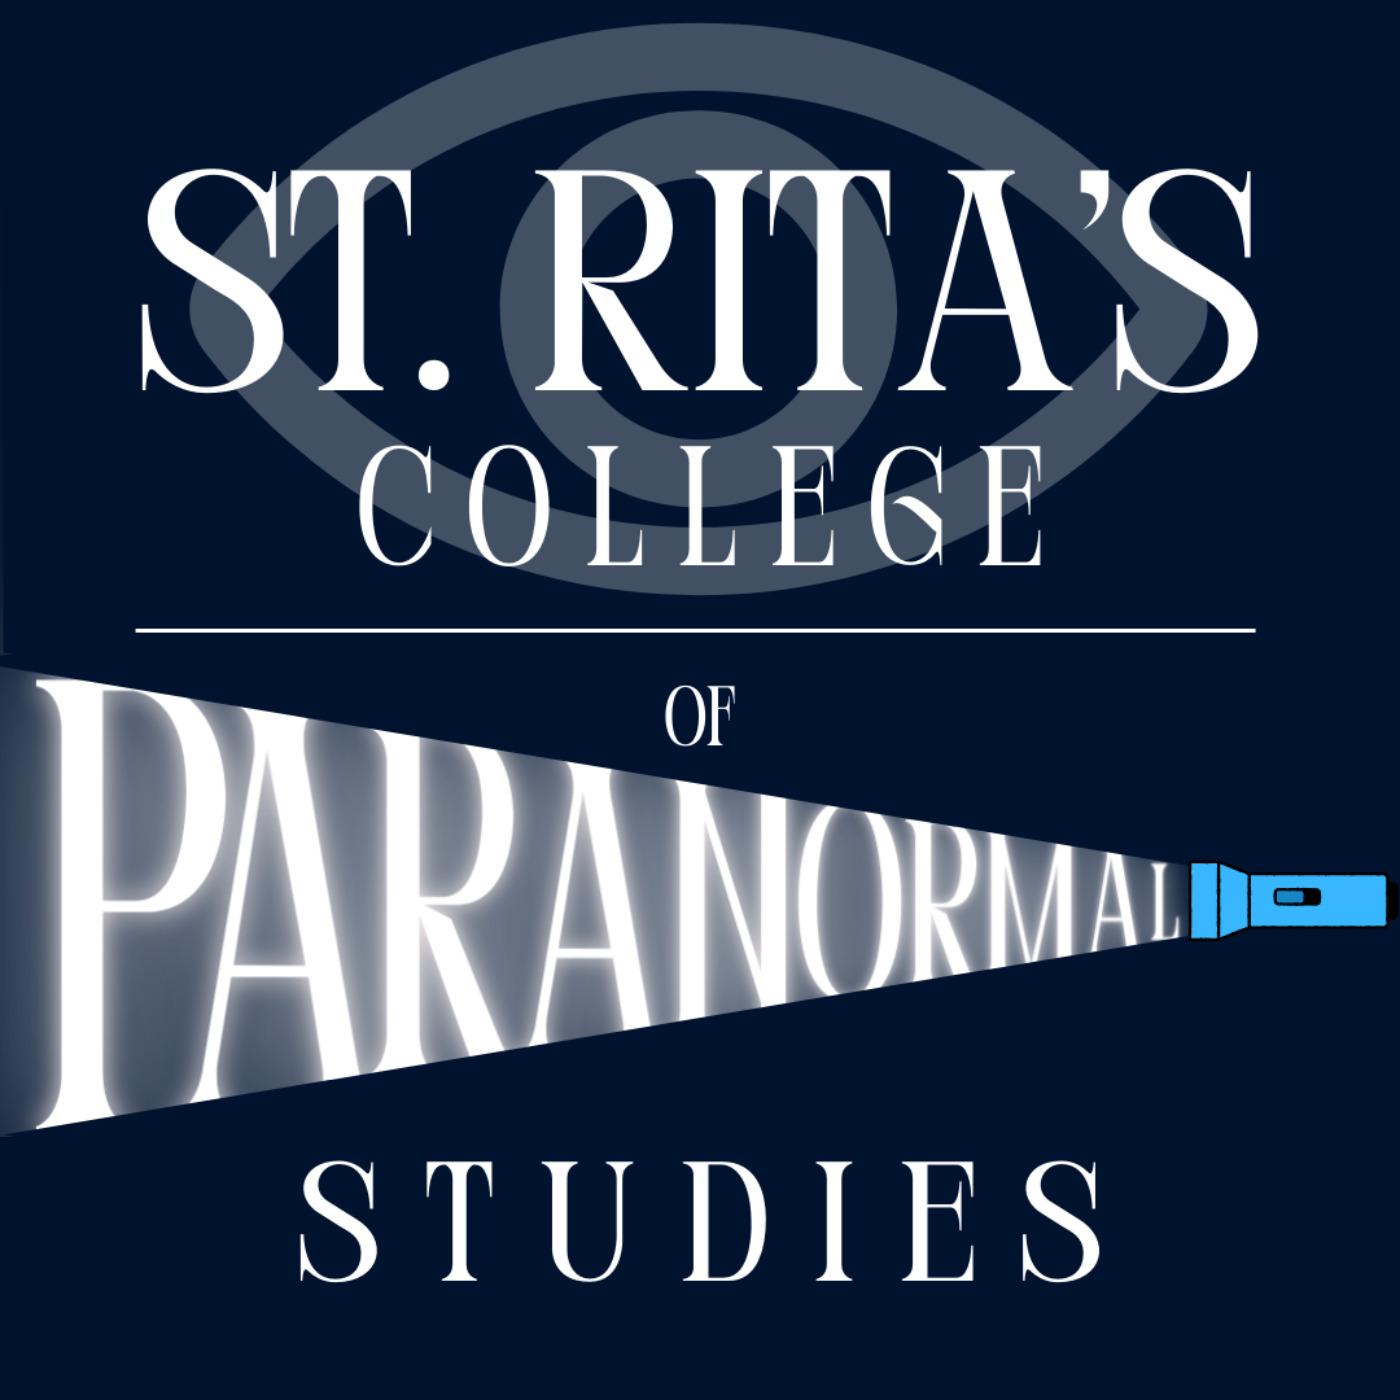 St. Rita's College of Paranormal Studies